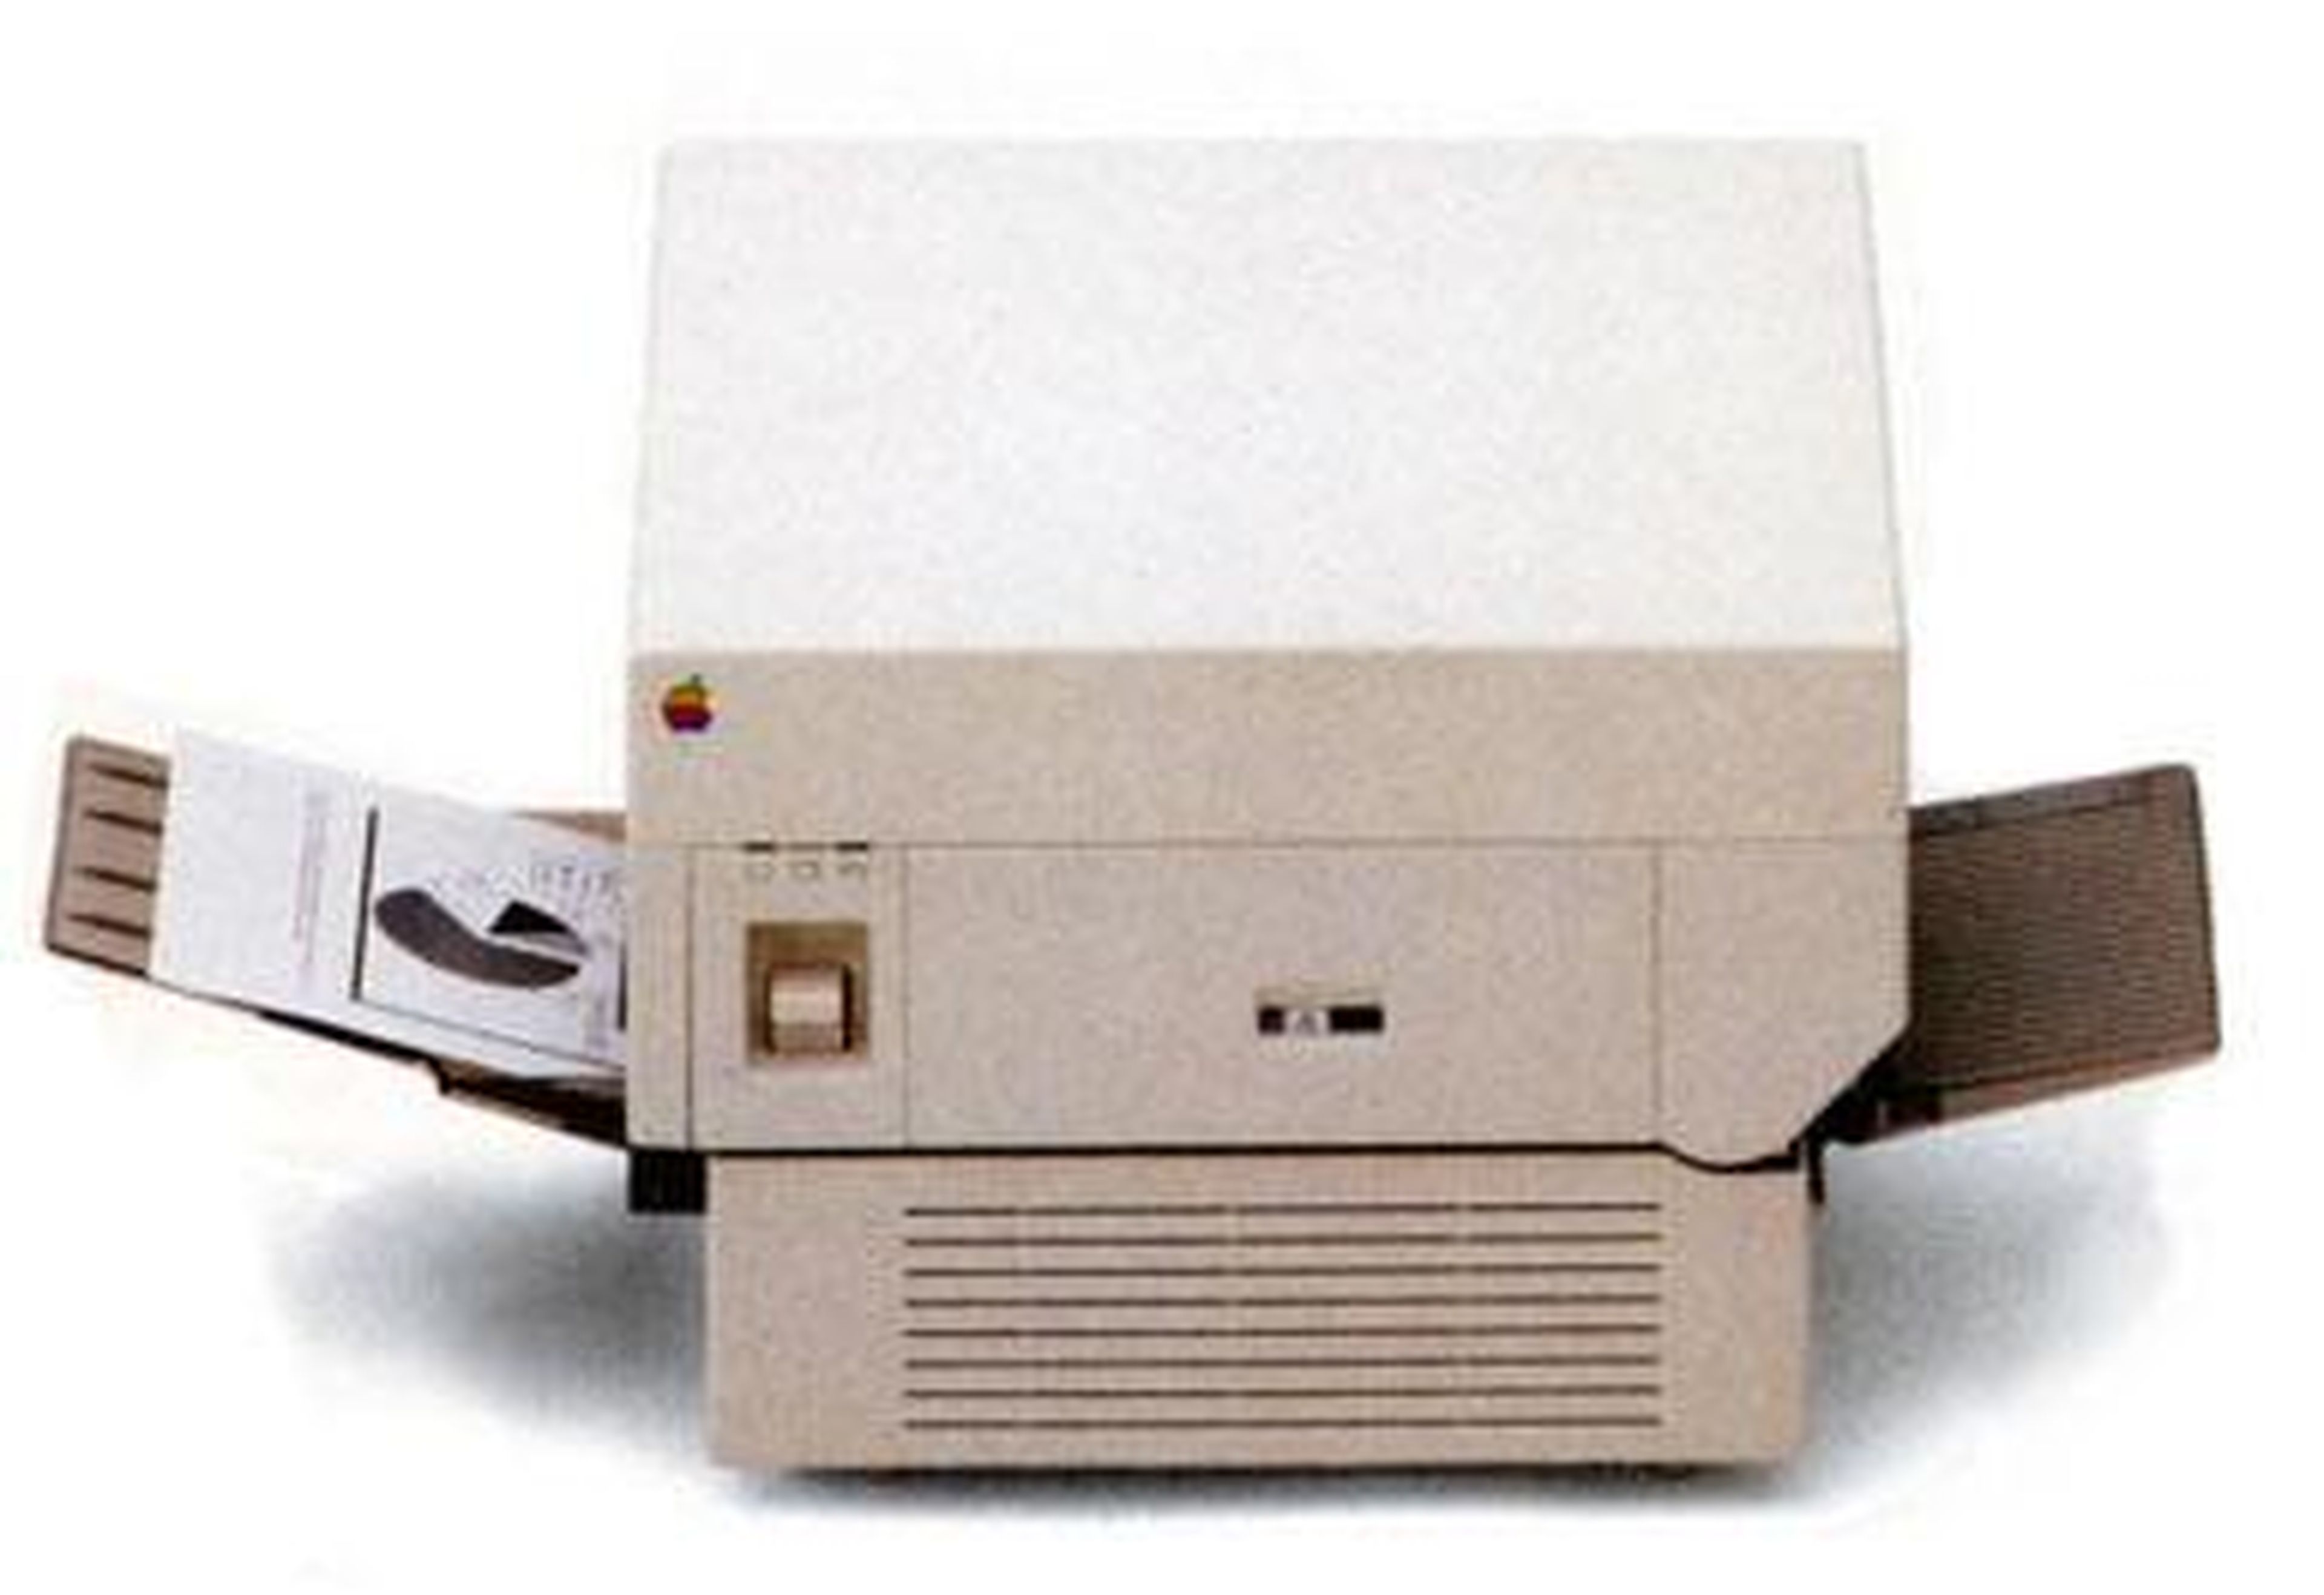 11. Apple LaserWriter (1985) — $6,995